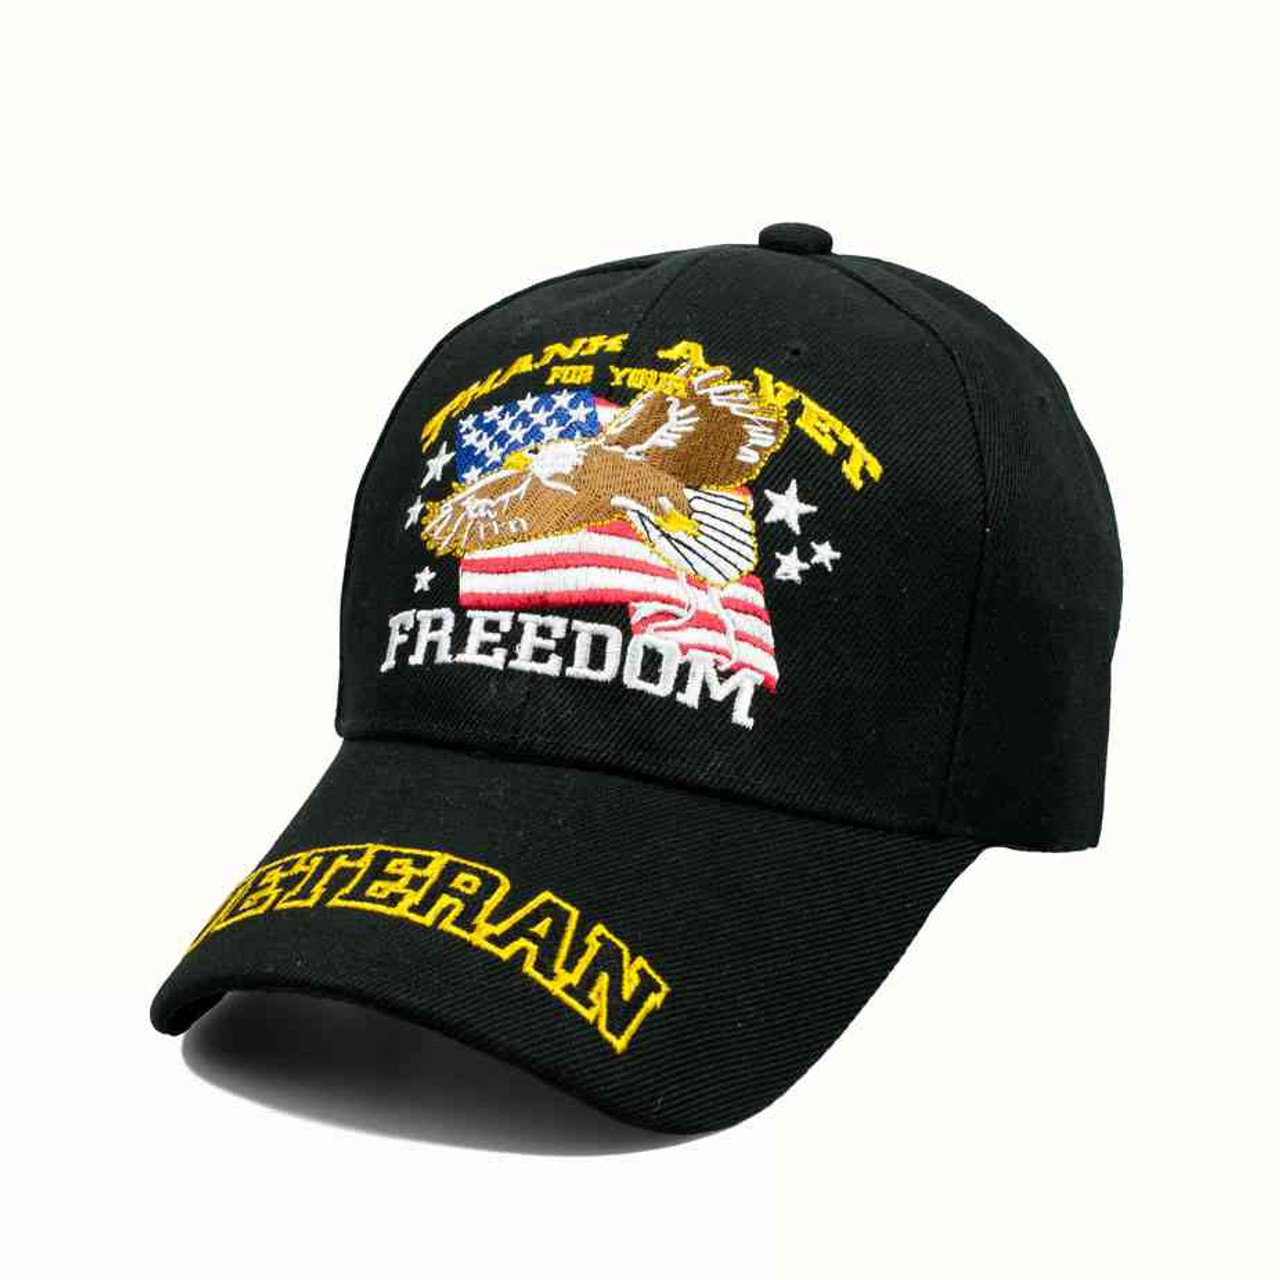 u s veteran thank a vet freedom hat